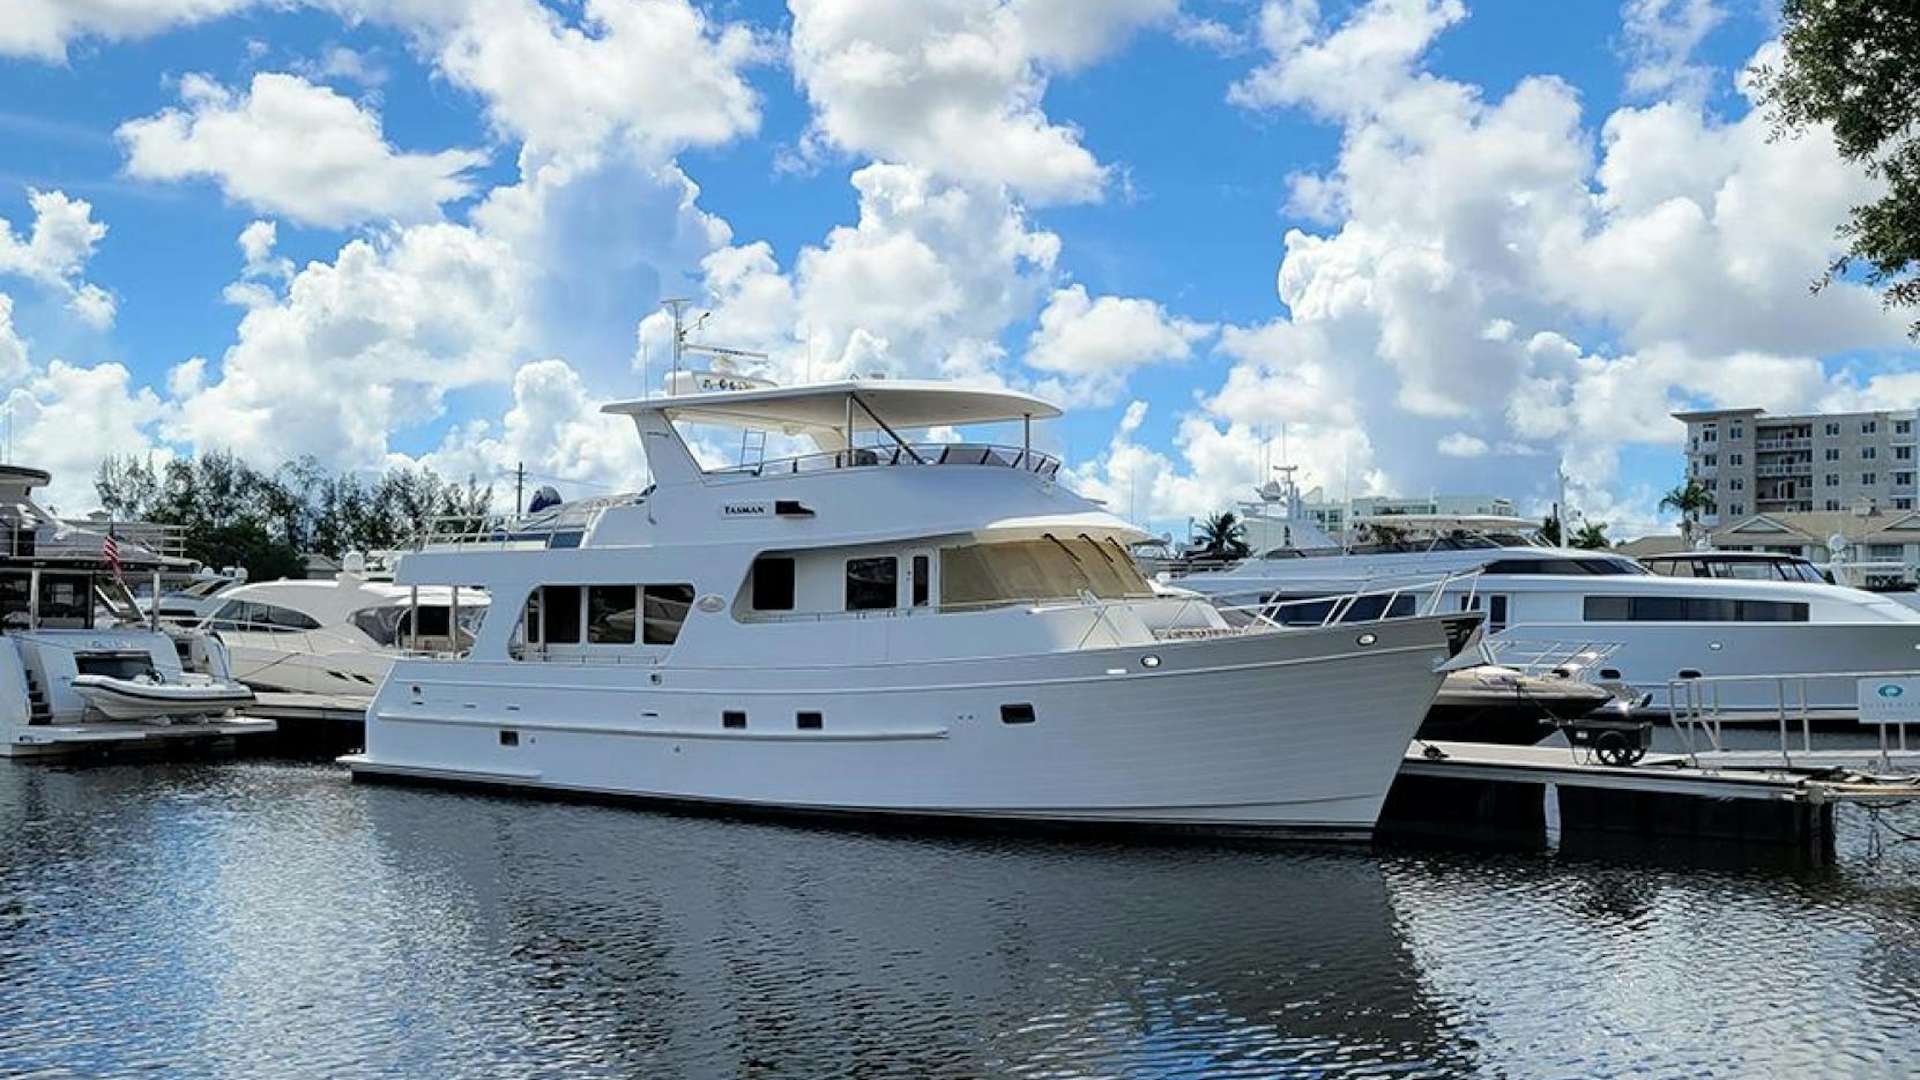 Tasman
Yacht for Sale